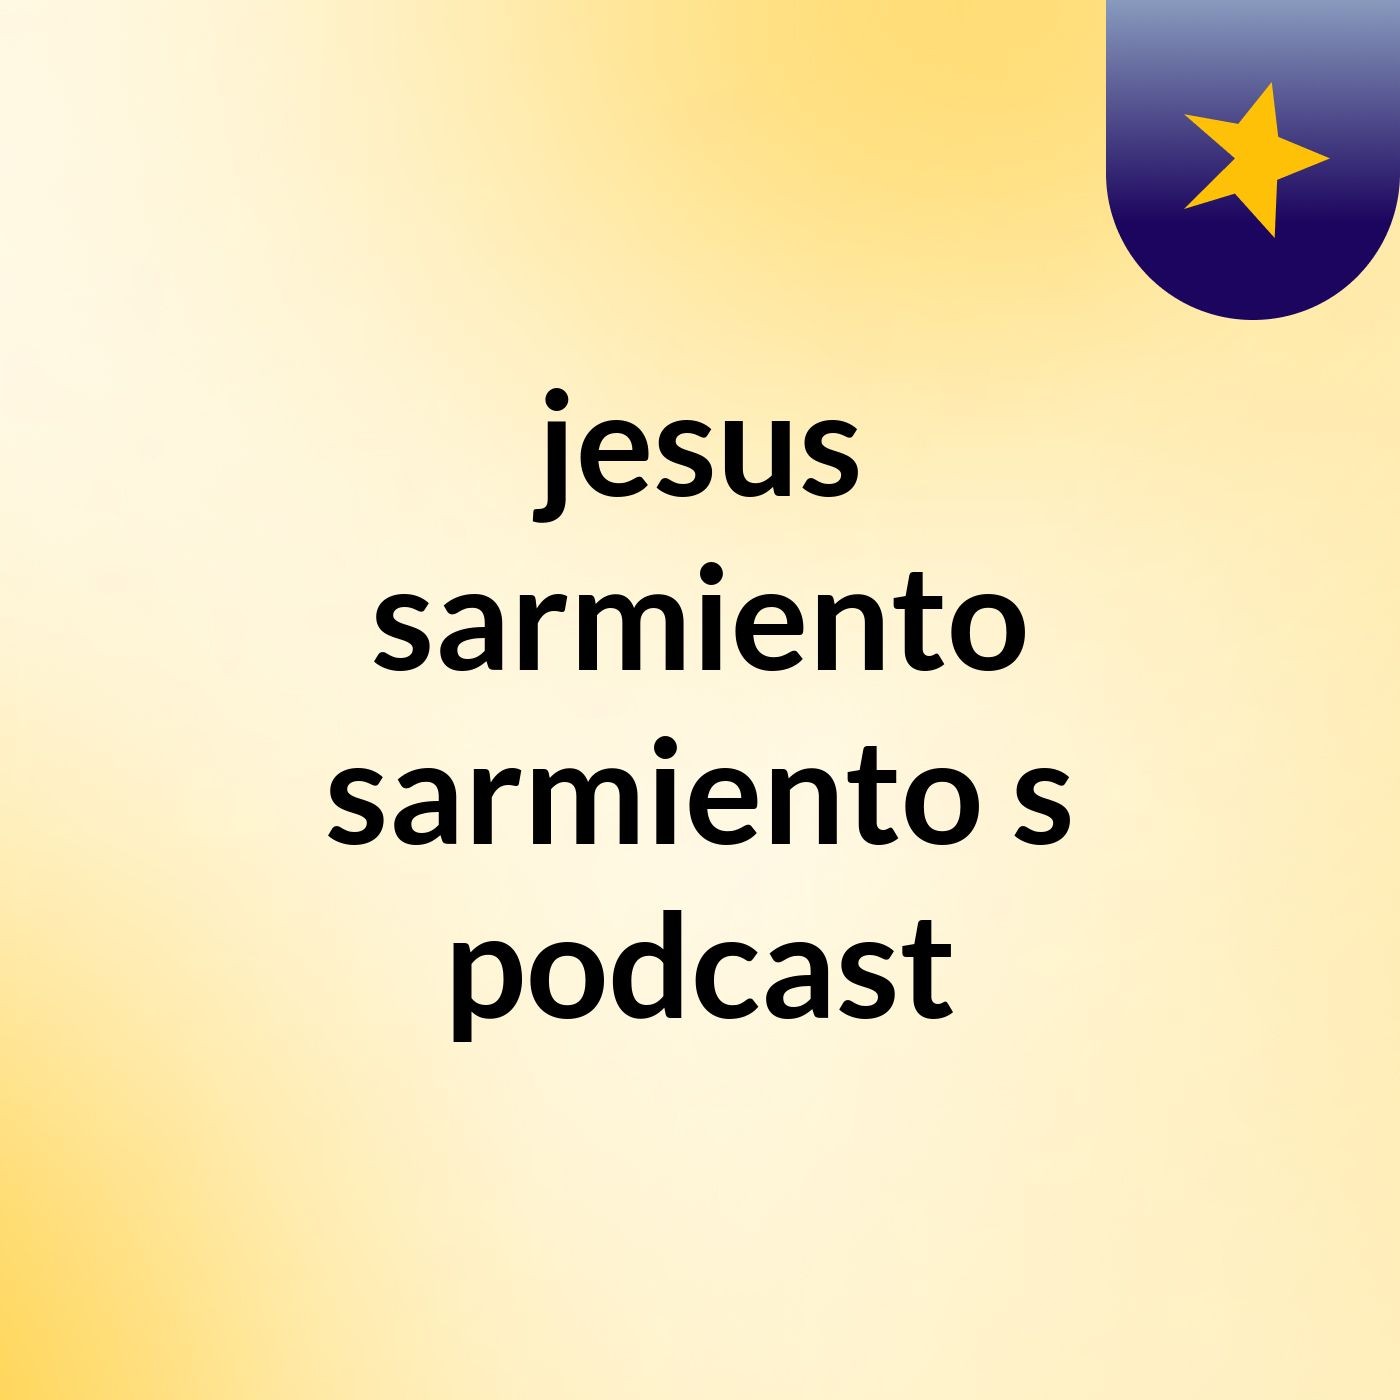 jesus sarmiento sarmiento's podcast